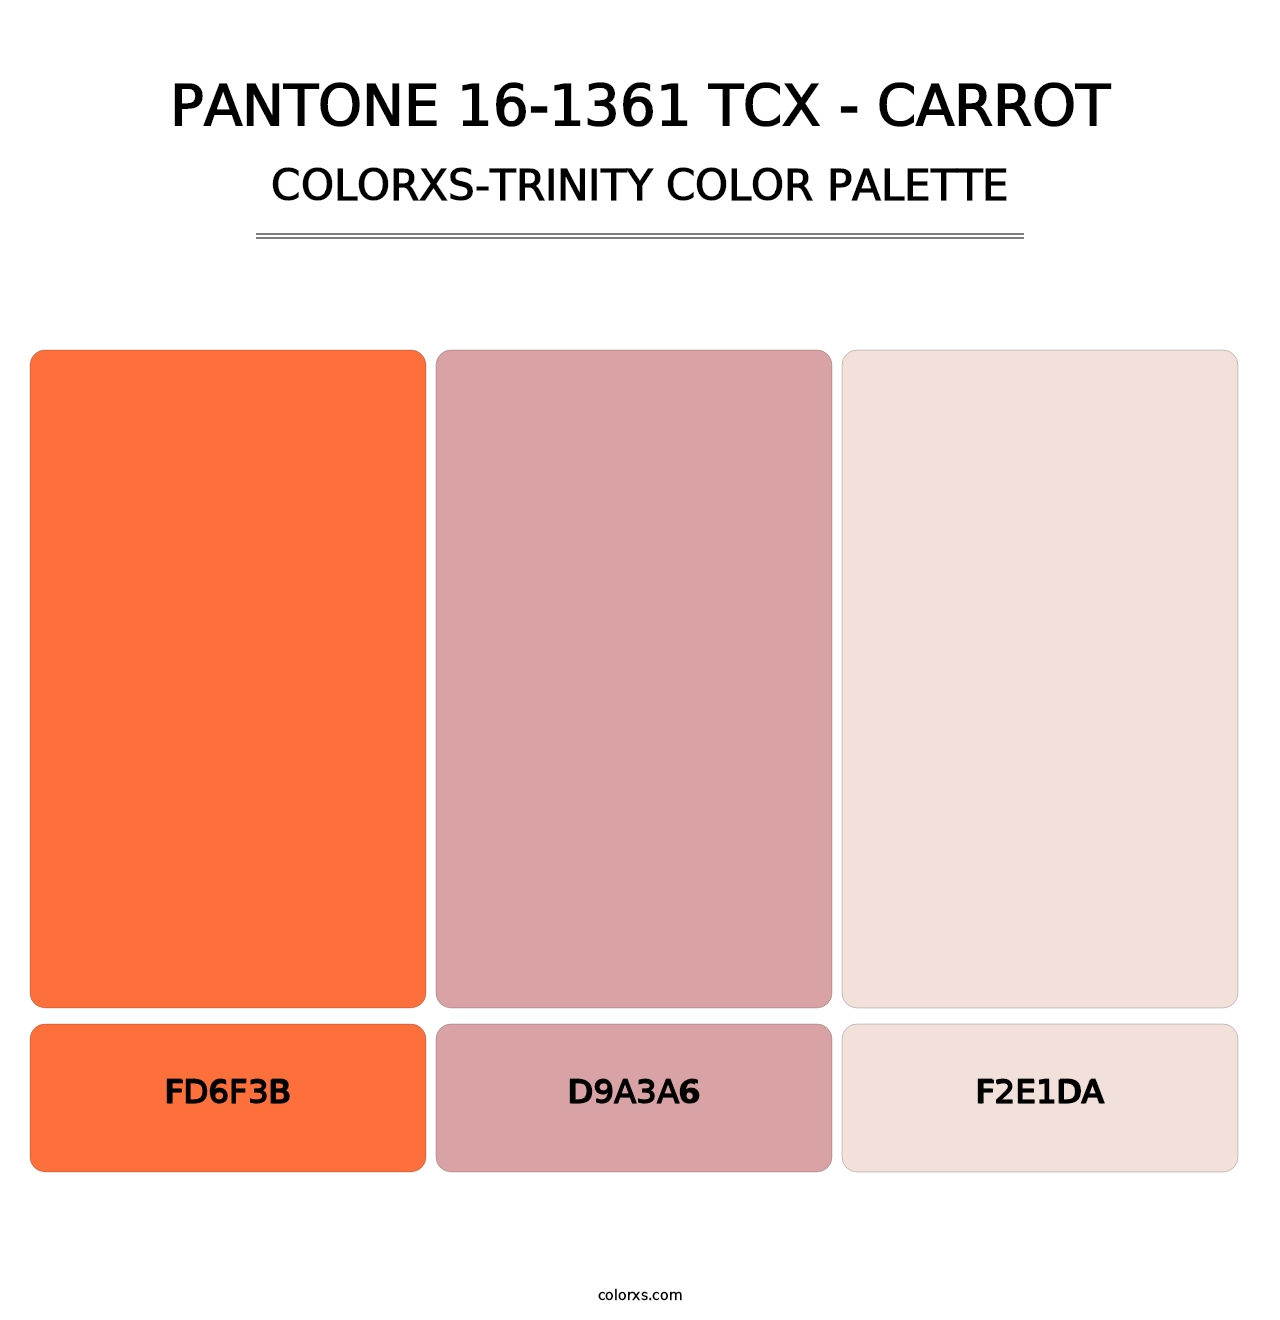 PANTONE 16-1361 TCX - Carrot - Colorxs Trinity Palette